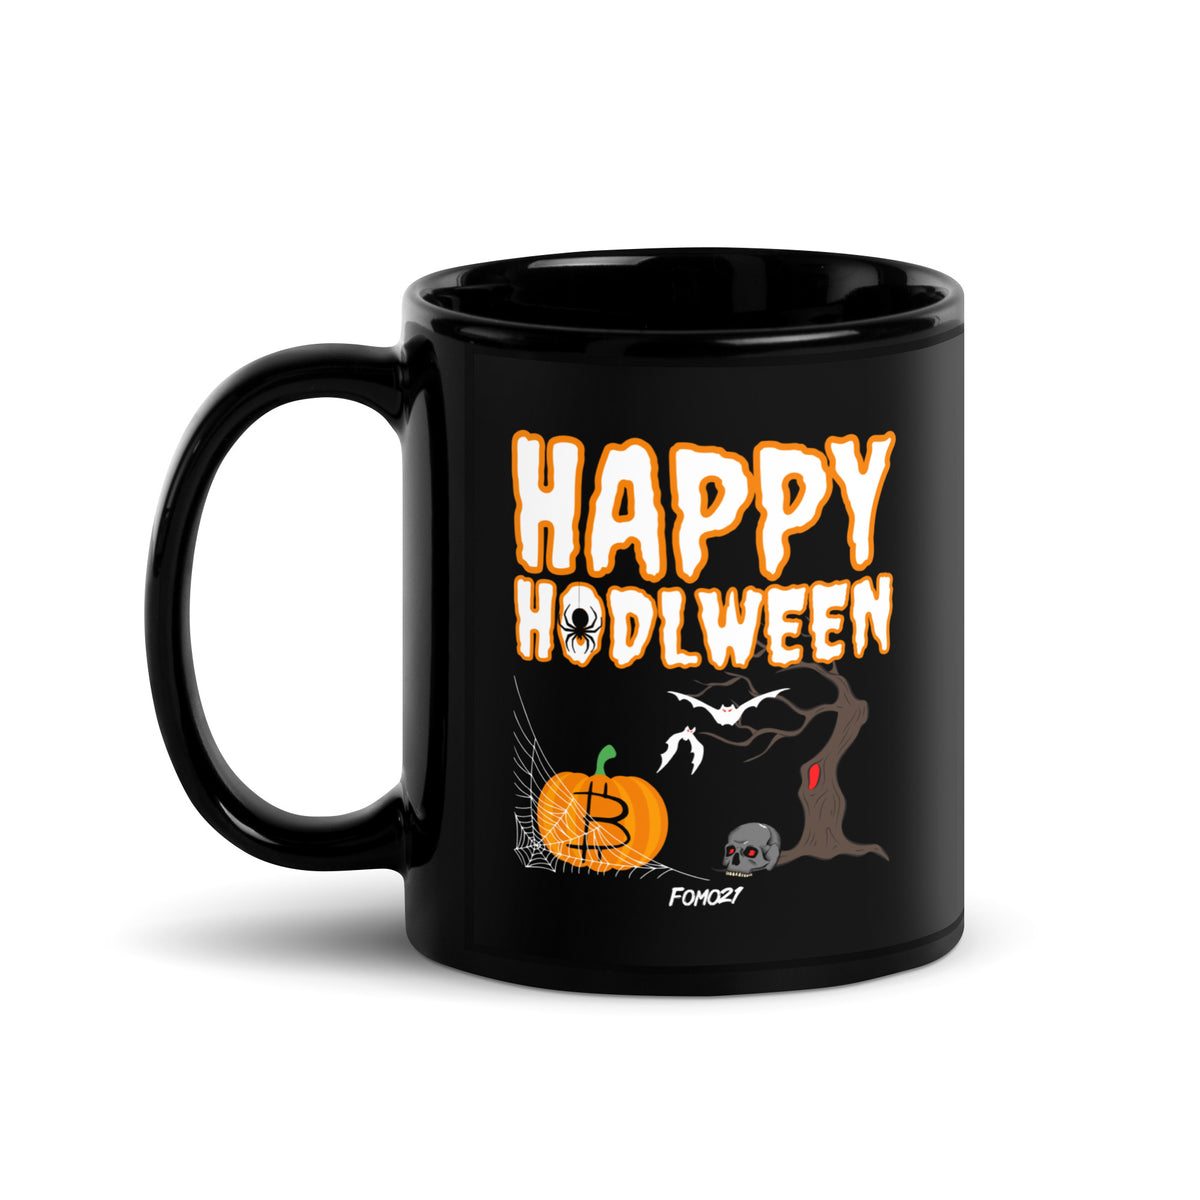 Happy HODLween Bitcoin Black Coffee Mug - fomo21